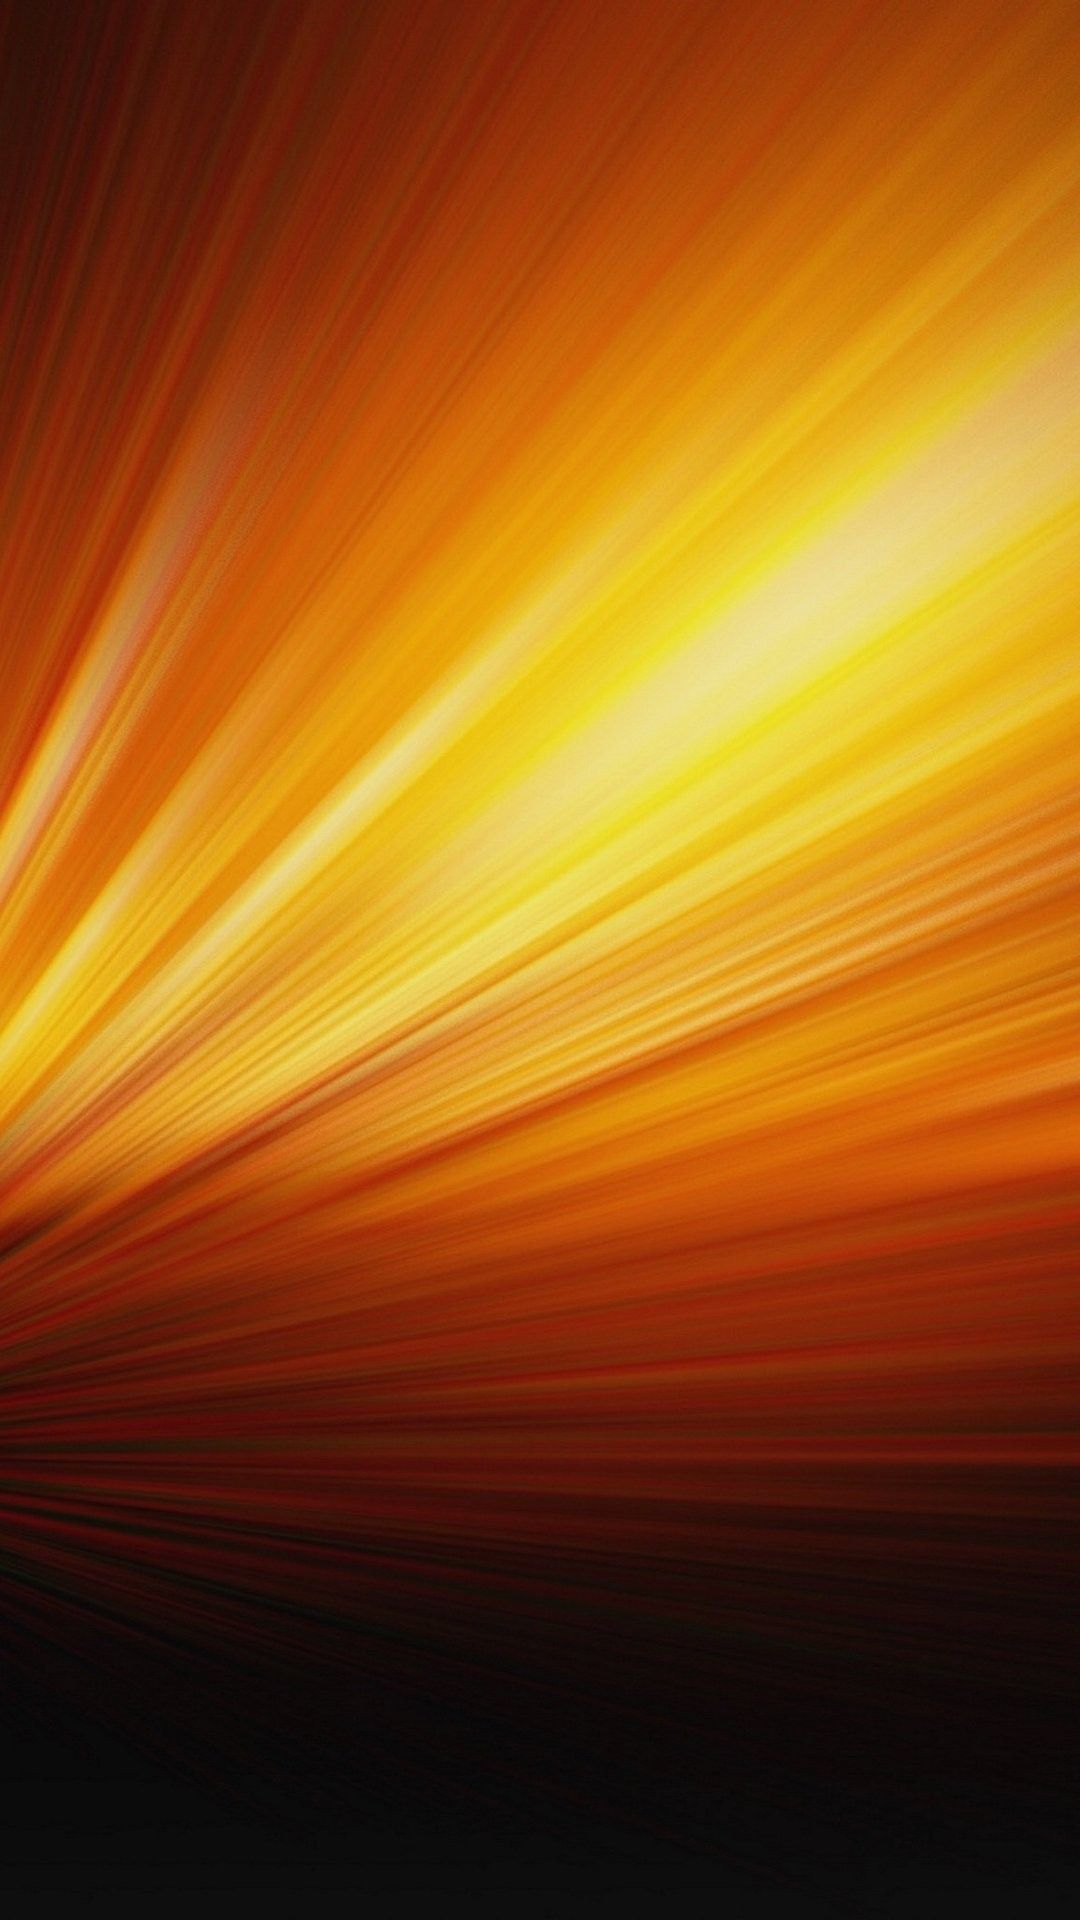 HD Orange Wallpaper. Orange wallpaper, iPhone 6 plus wallpaper, Orange background